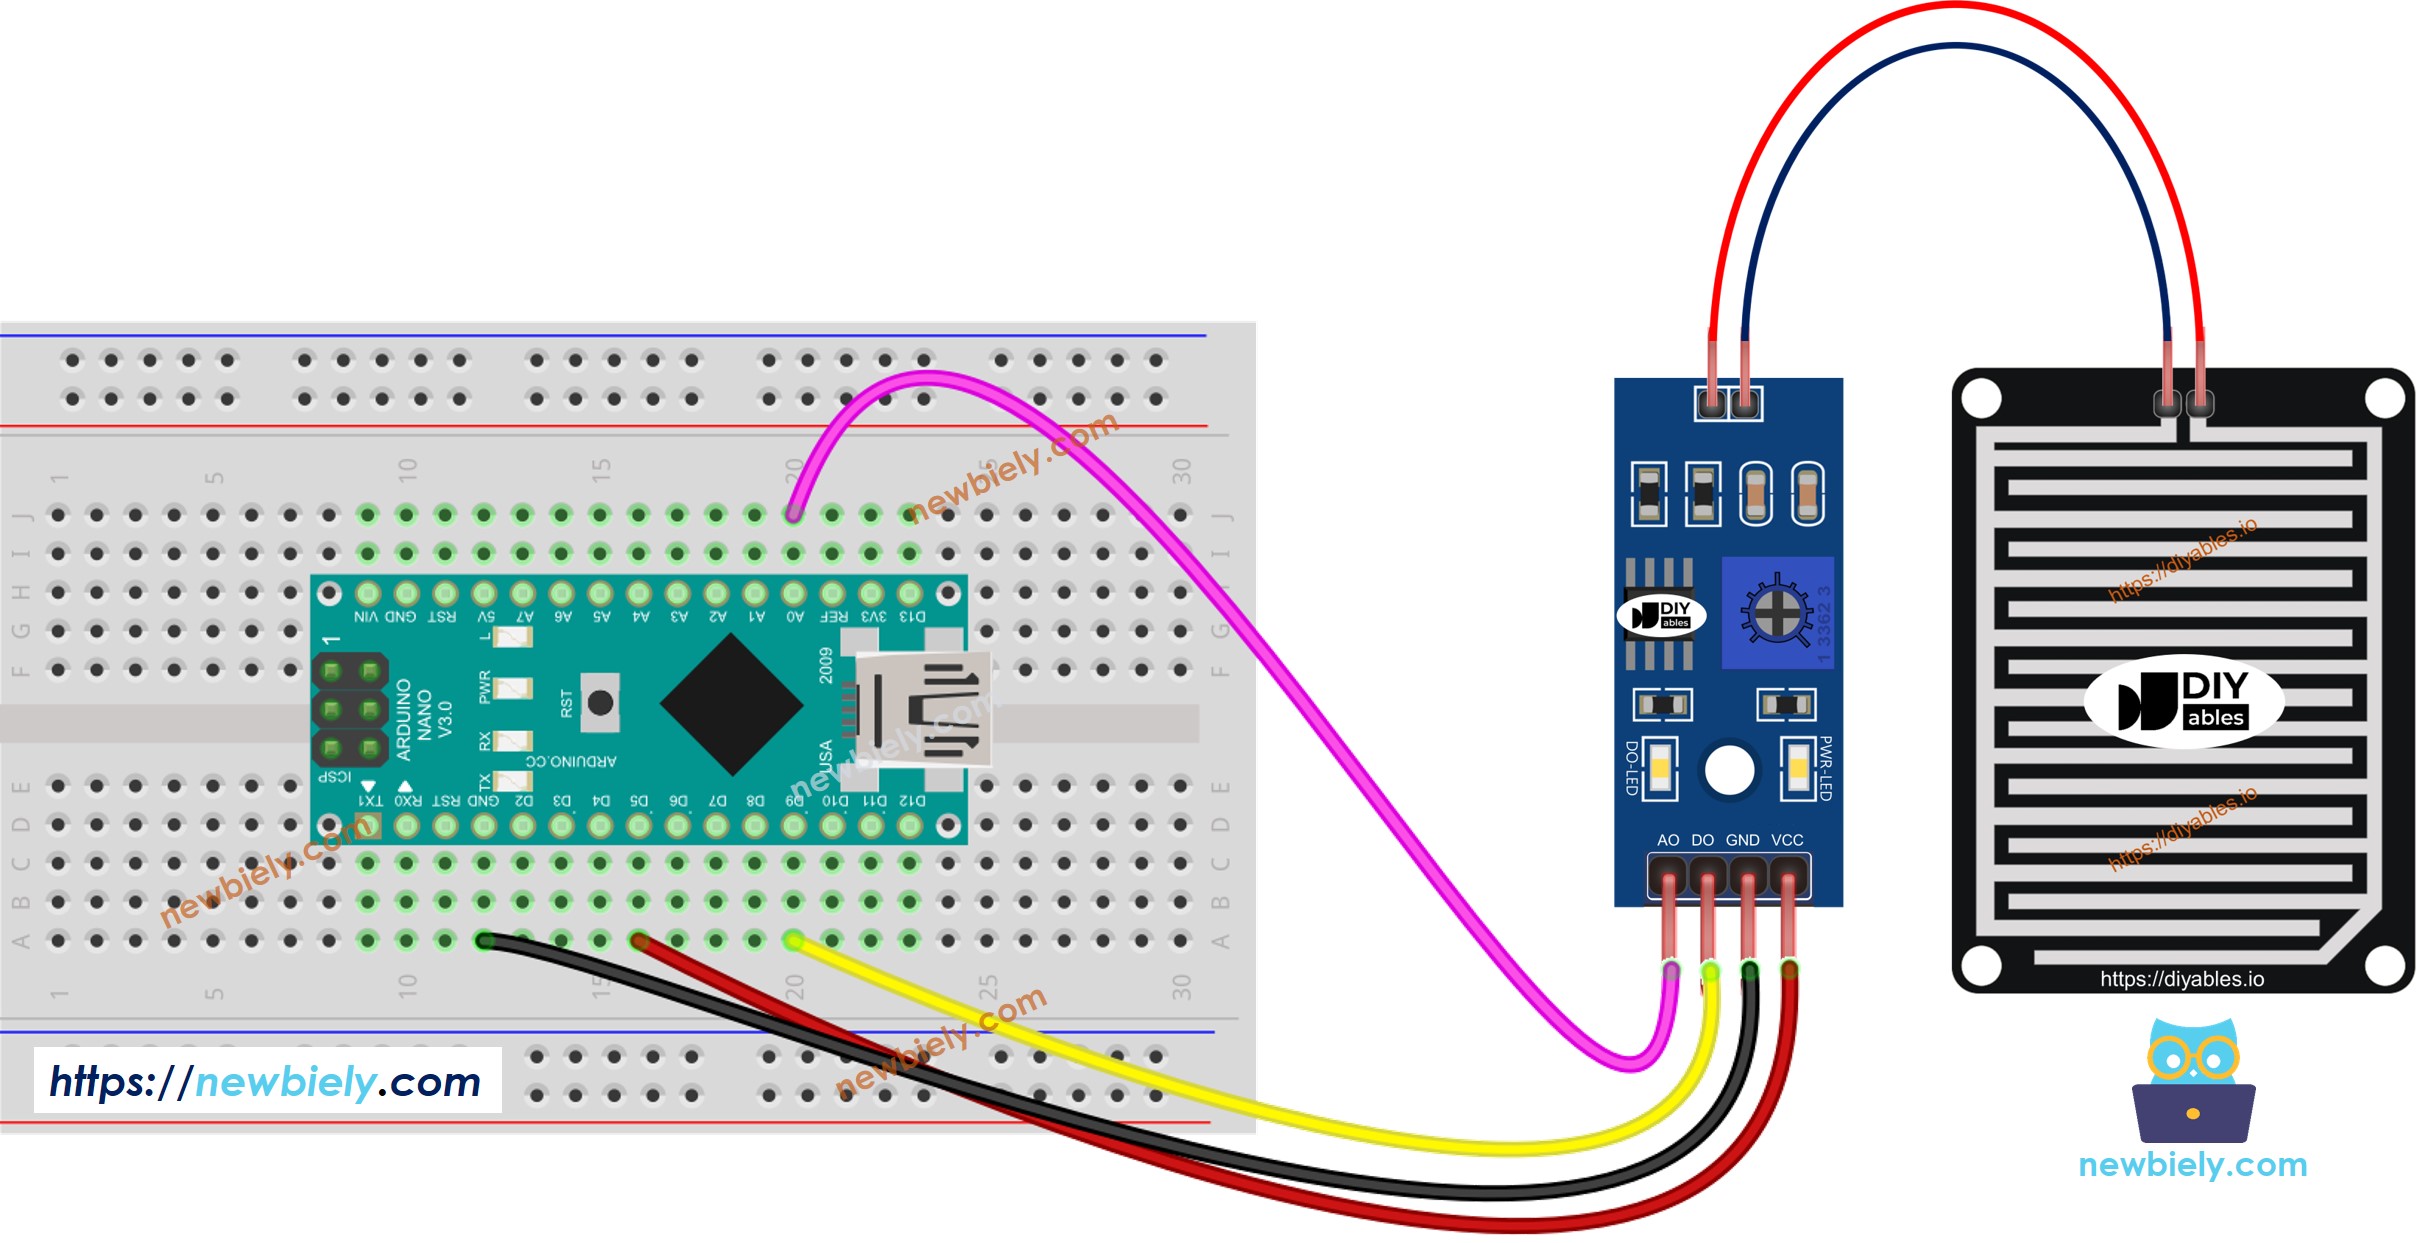 The wiring diagram between Arduino Nano and rain detector